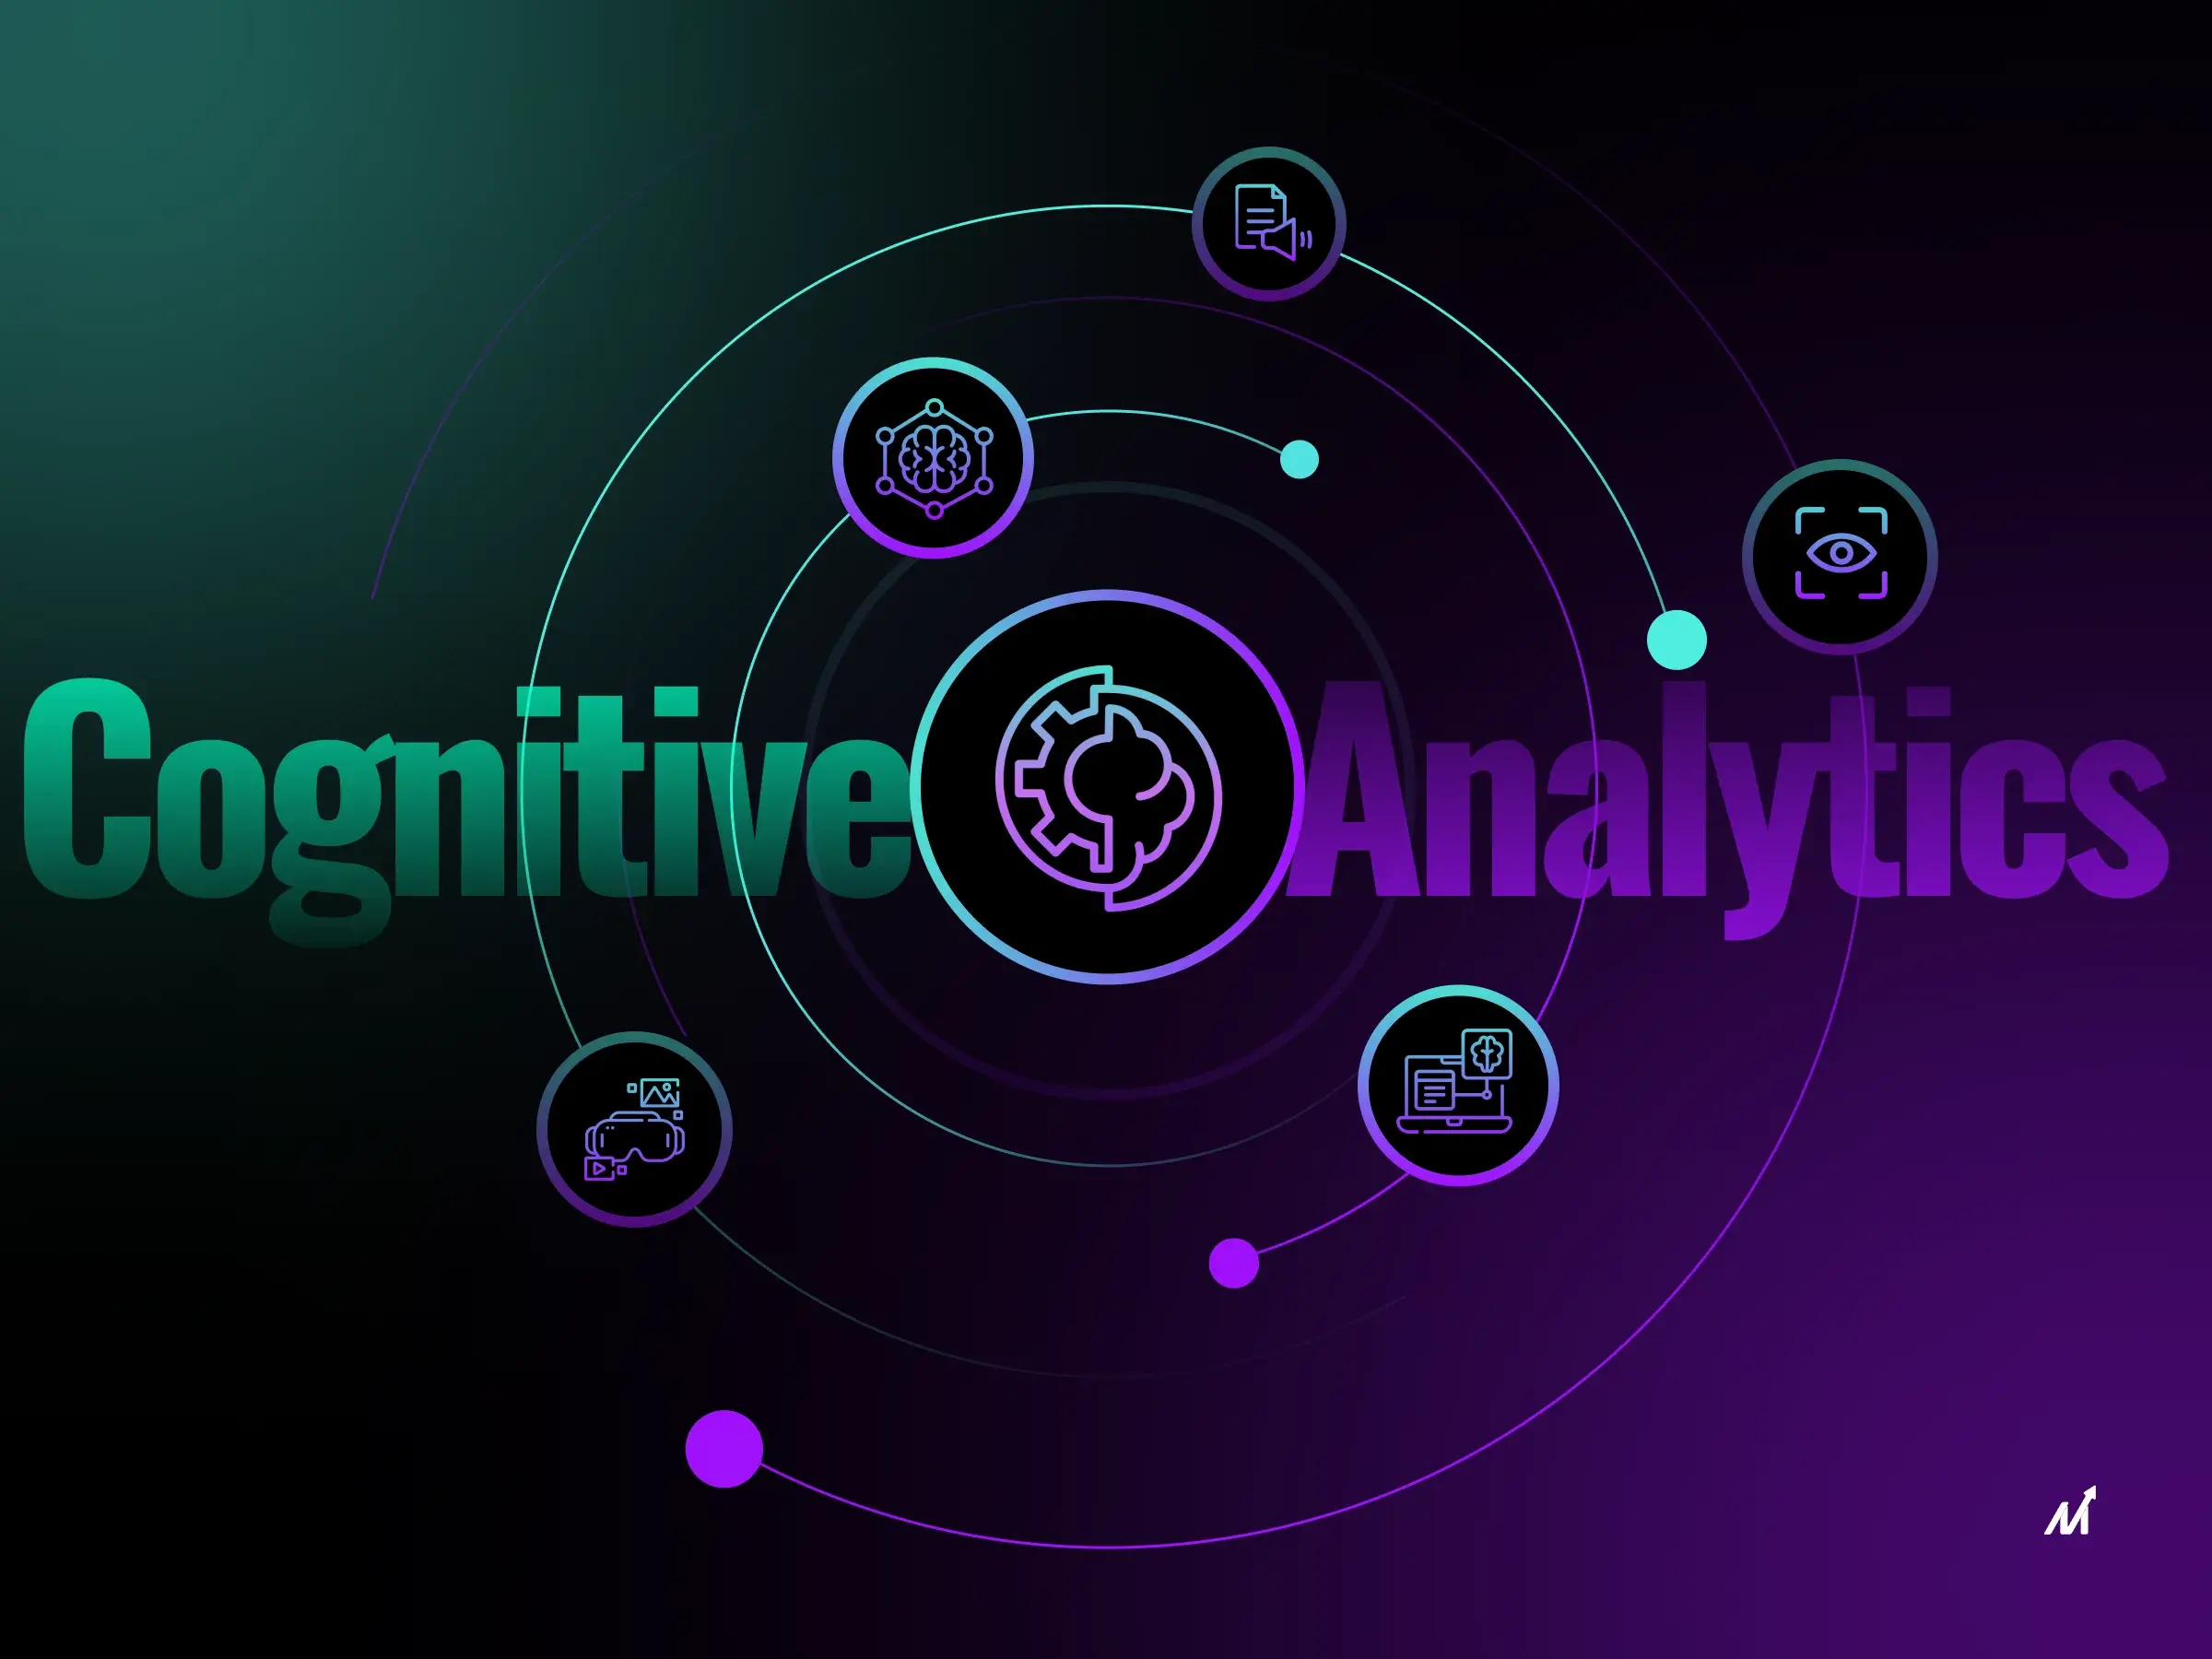 Cognitive analytics